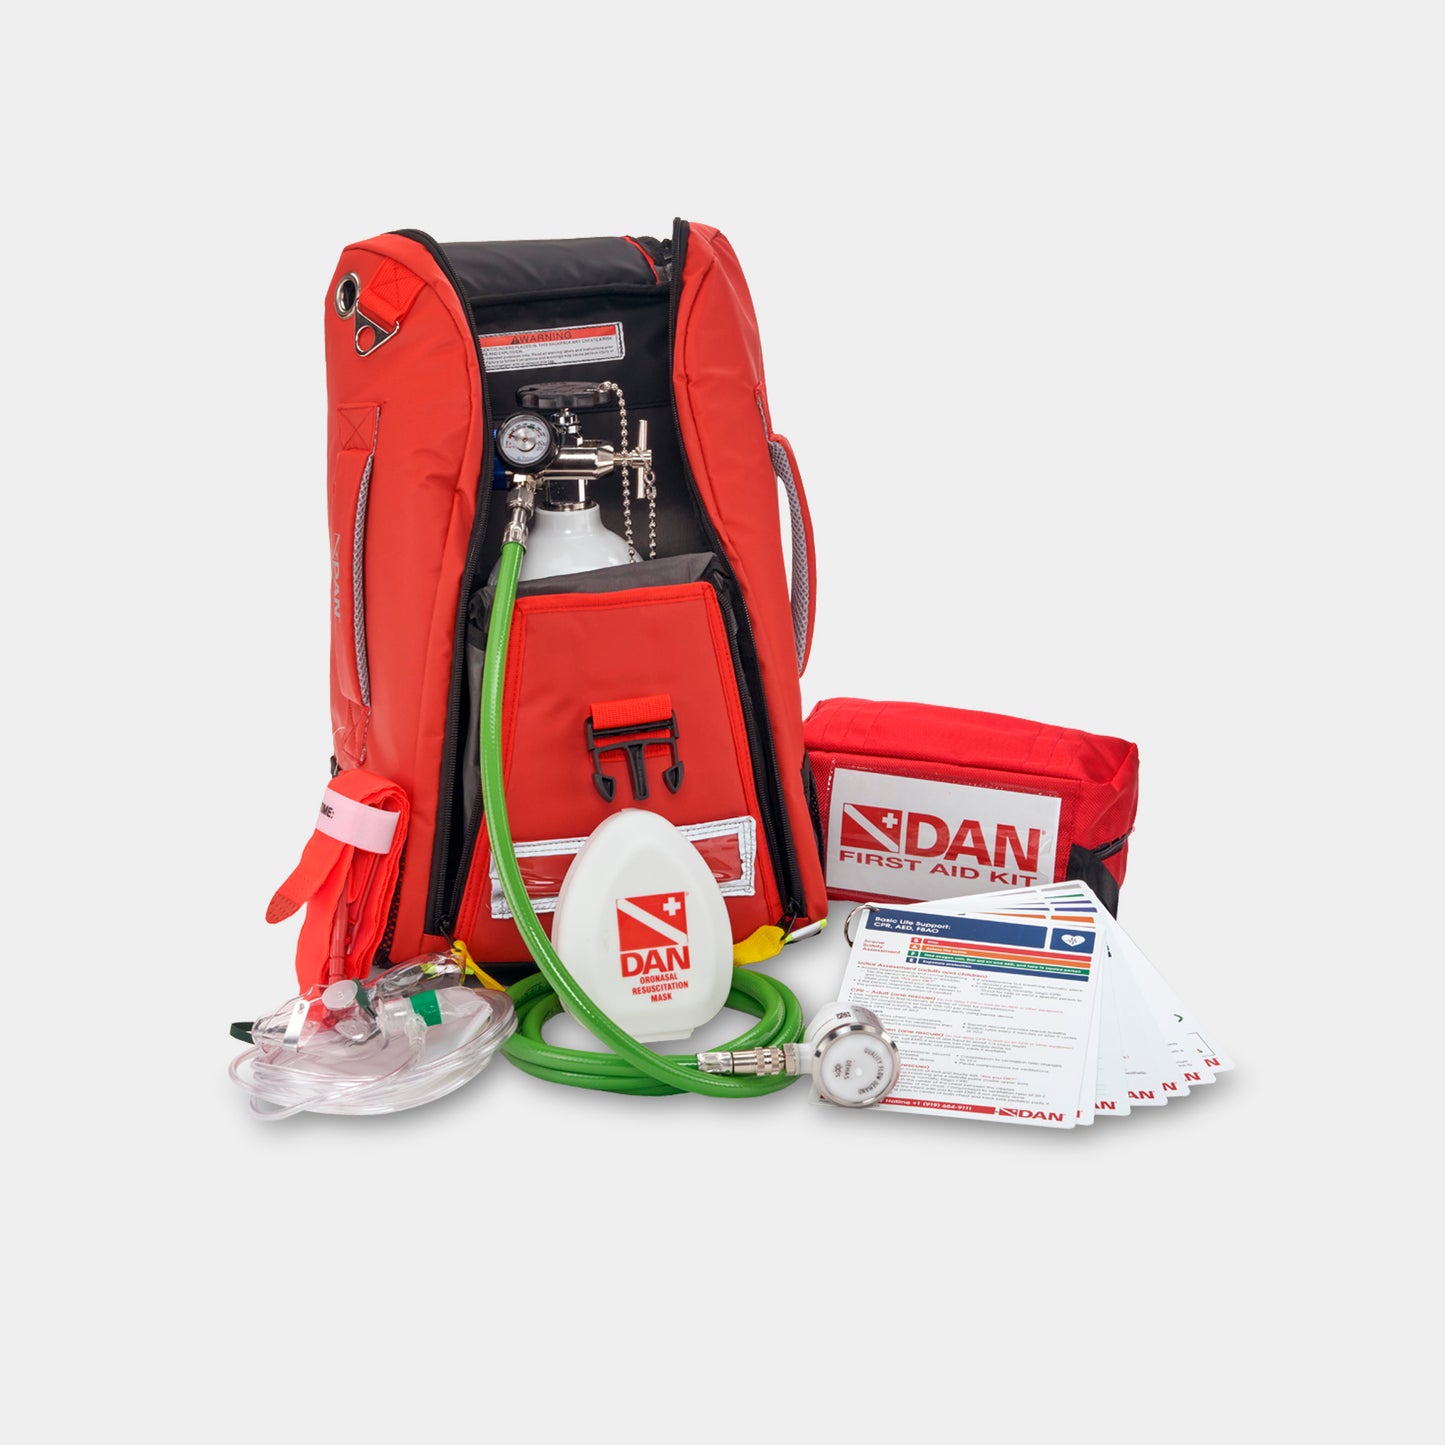 First-Aid Backpack w/O2 â€“ white shoulder